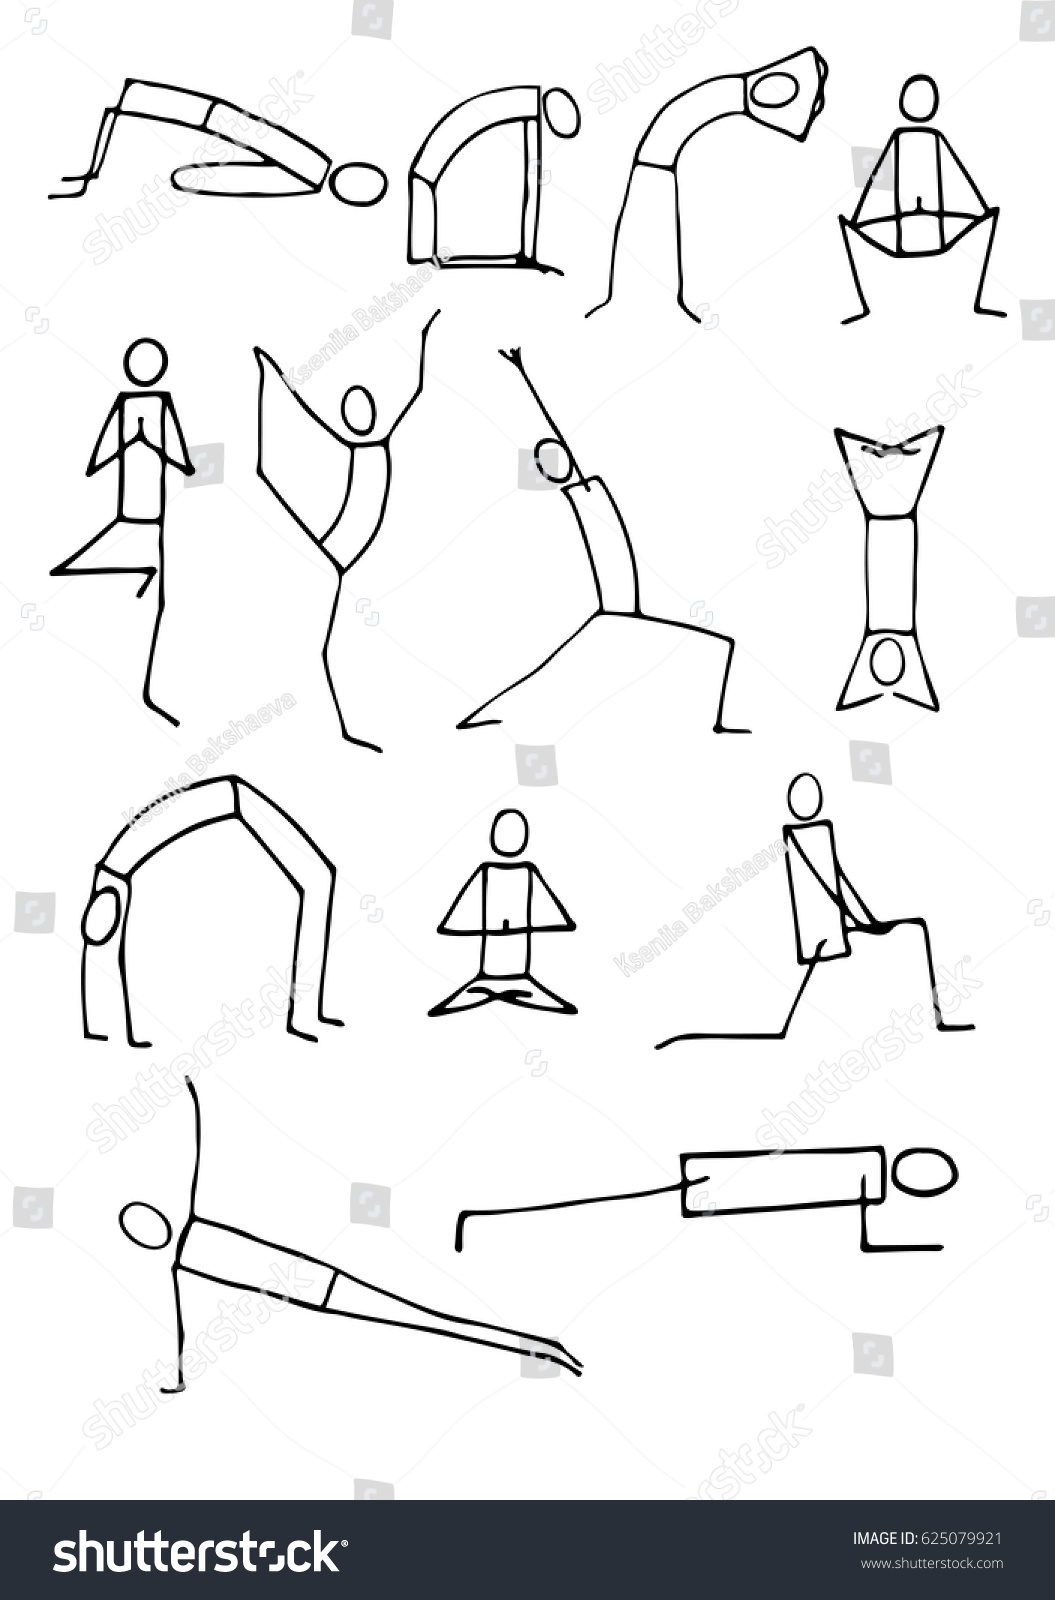 Set Hand Drawn Stickman Yoga Poses Stock Vector (Royalty Free) 625079921